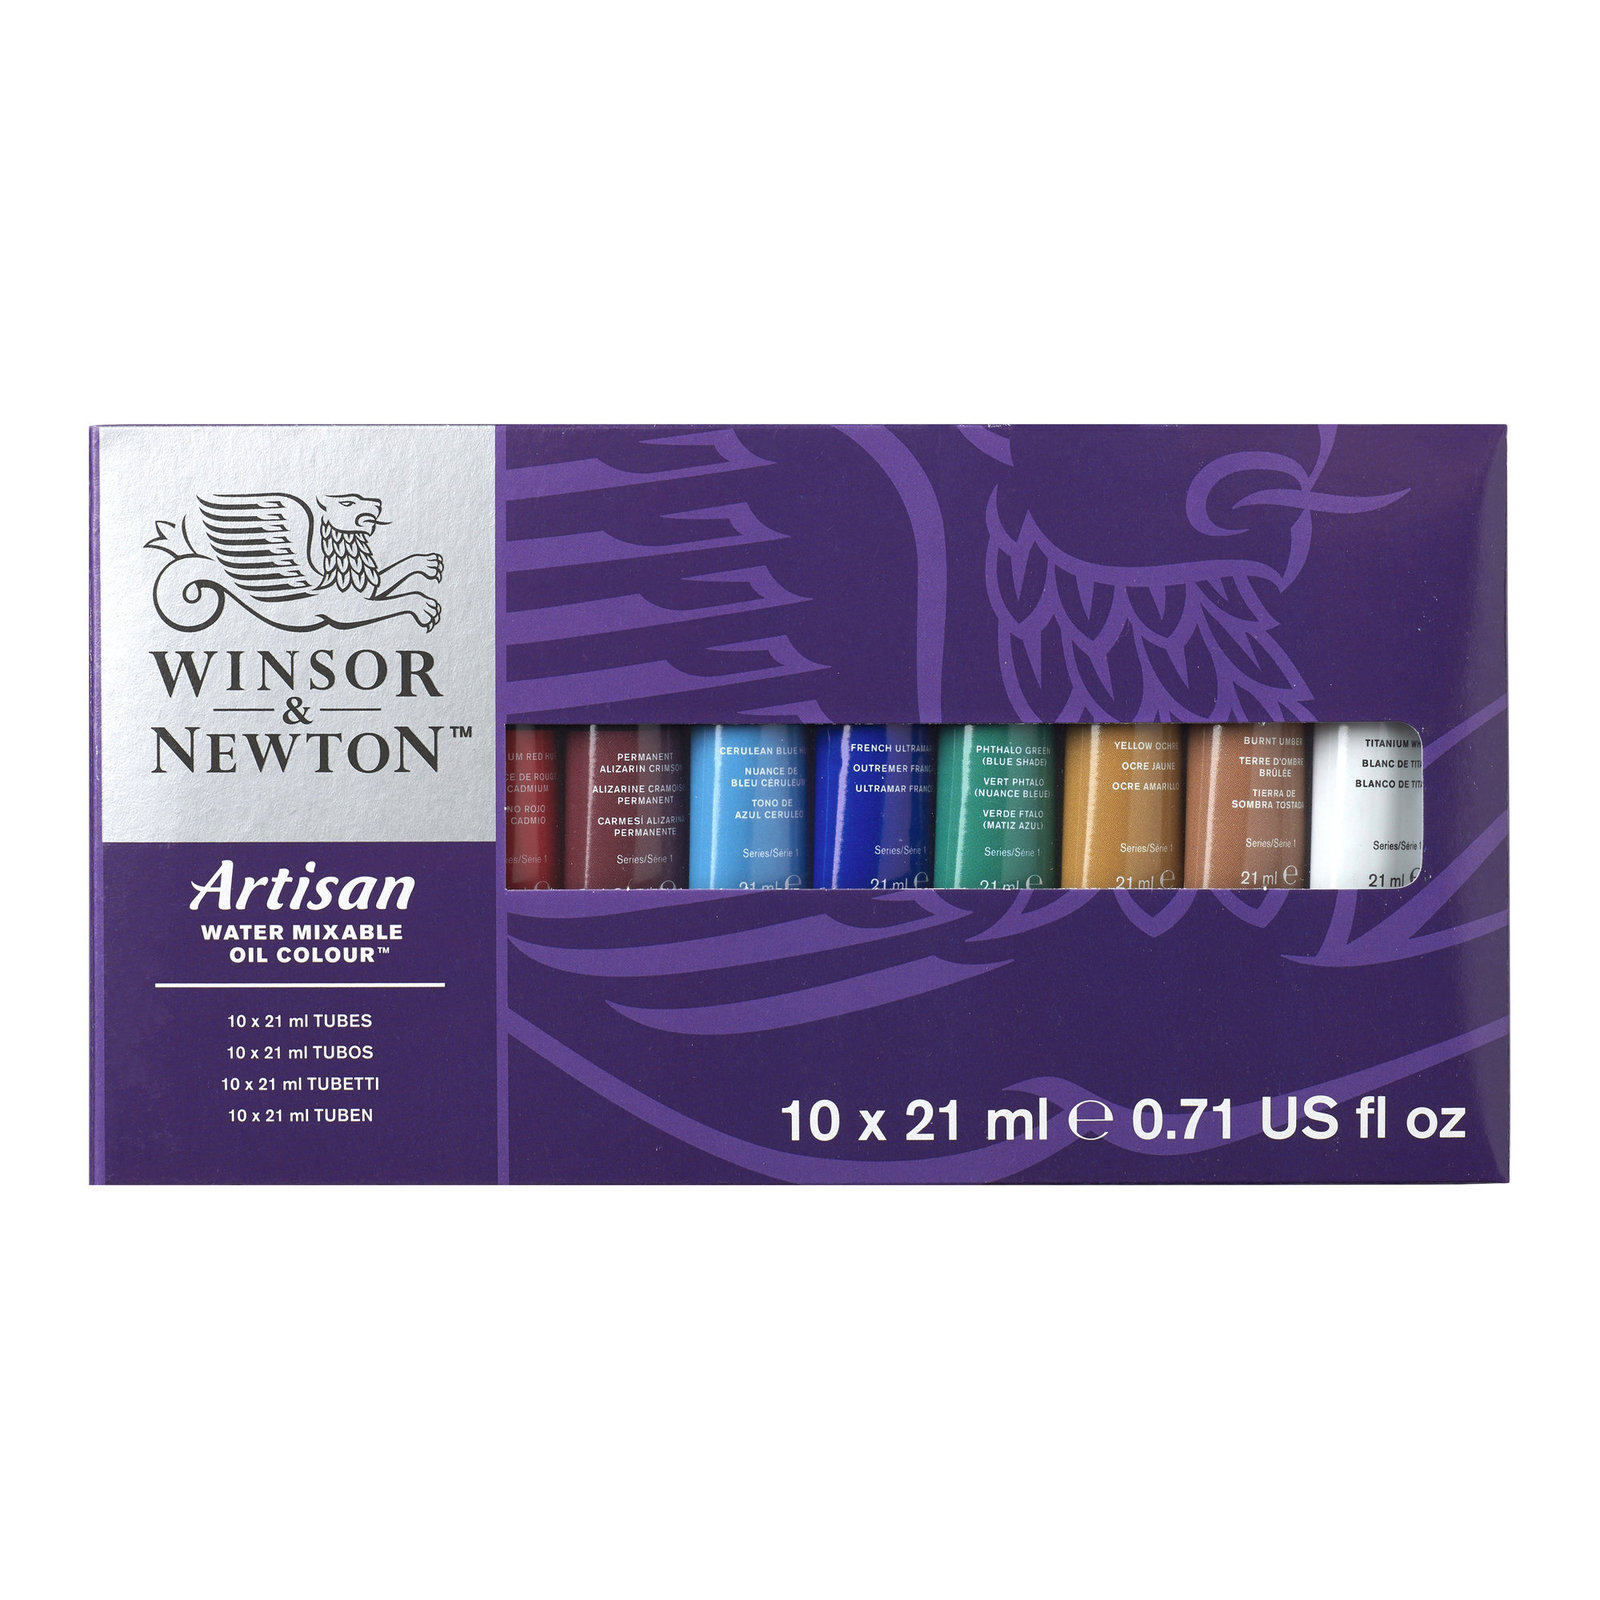 Winsor & Newton Artisan Water Mixable Oil Paint Colour set of 10 x 21Ml, 1590227